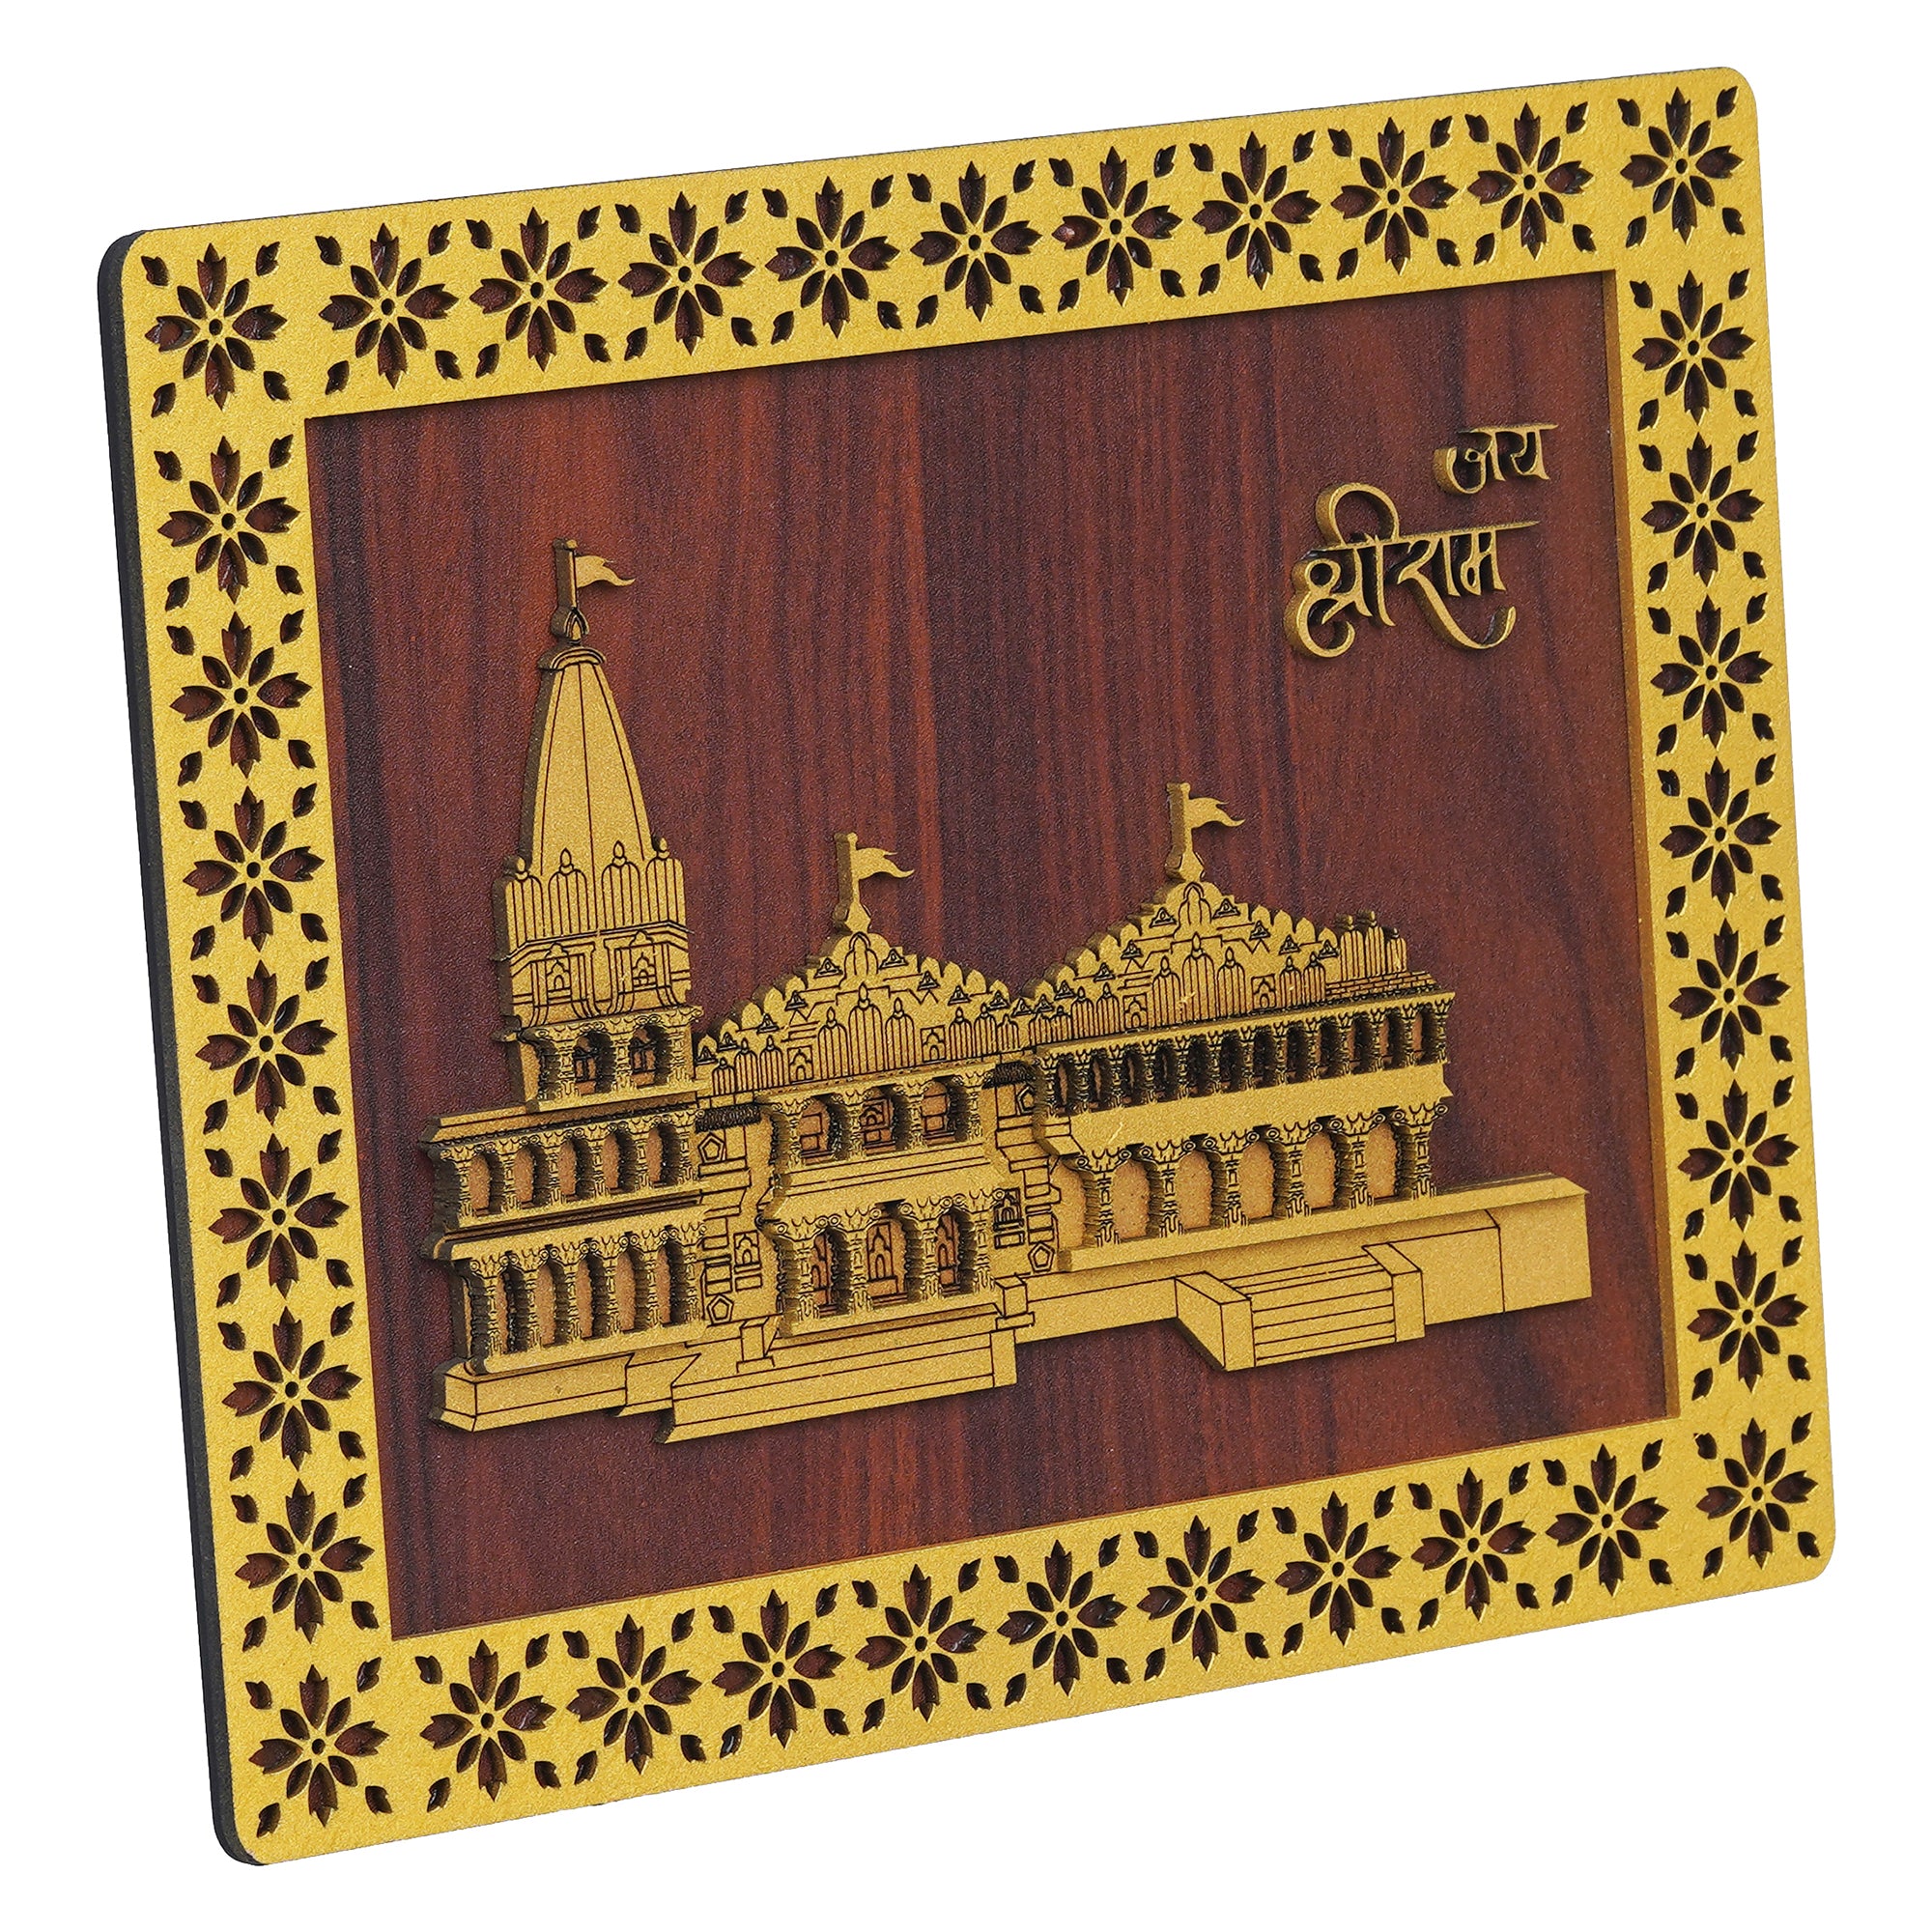 eCraftIndia Jai Shri Ram Mandir Ayodhya Decorative Wooden Frame - Religious Wall Hanging Showpiece for Home Decor, and Spiritual Gifting (Gold, Brown) 6